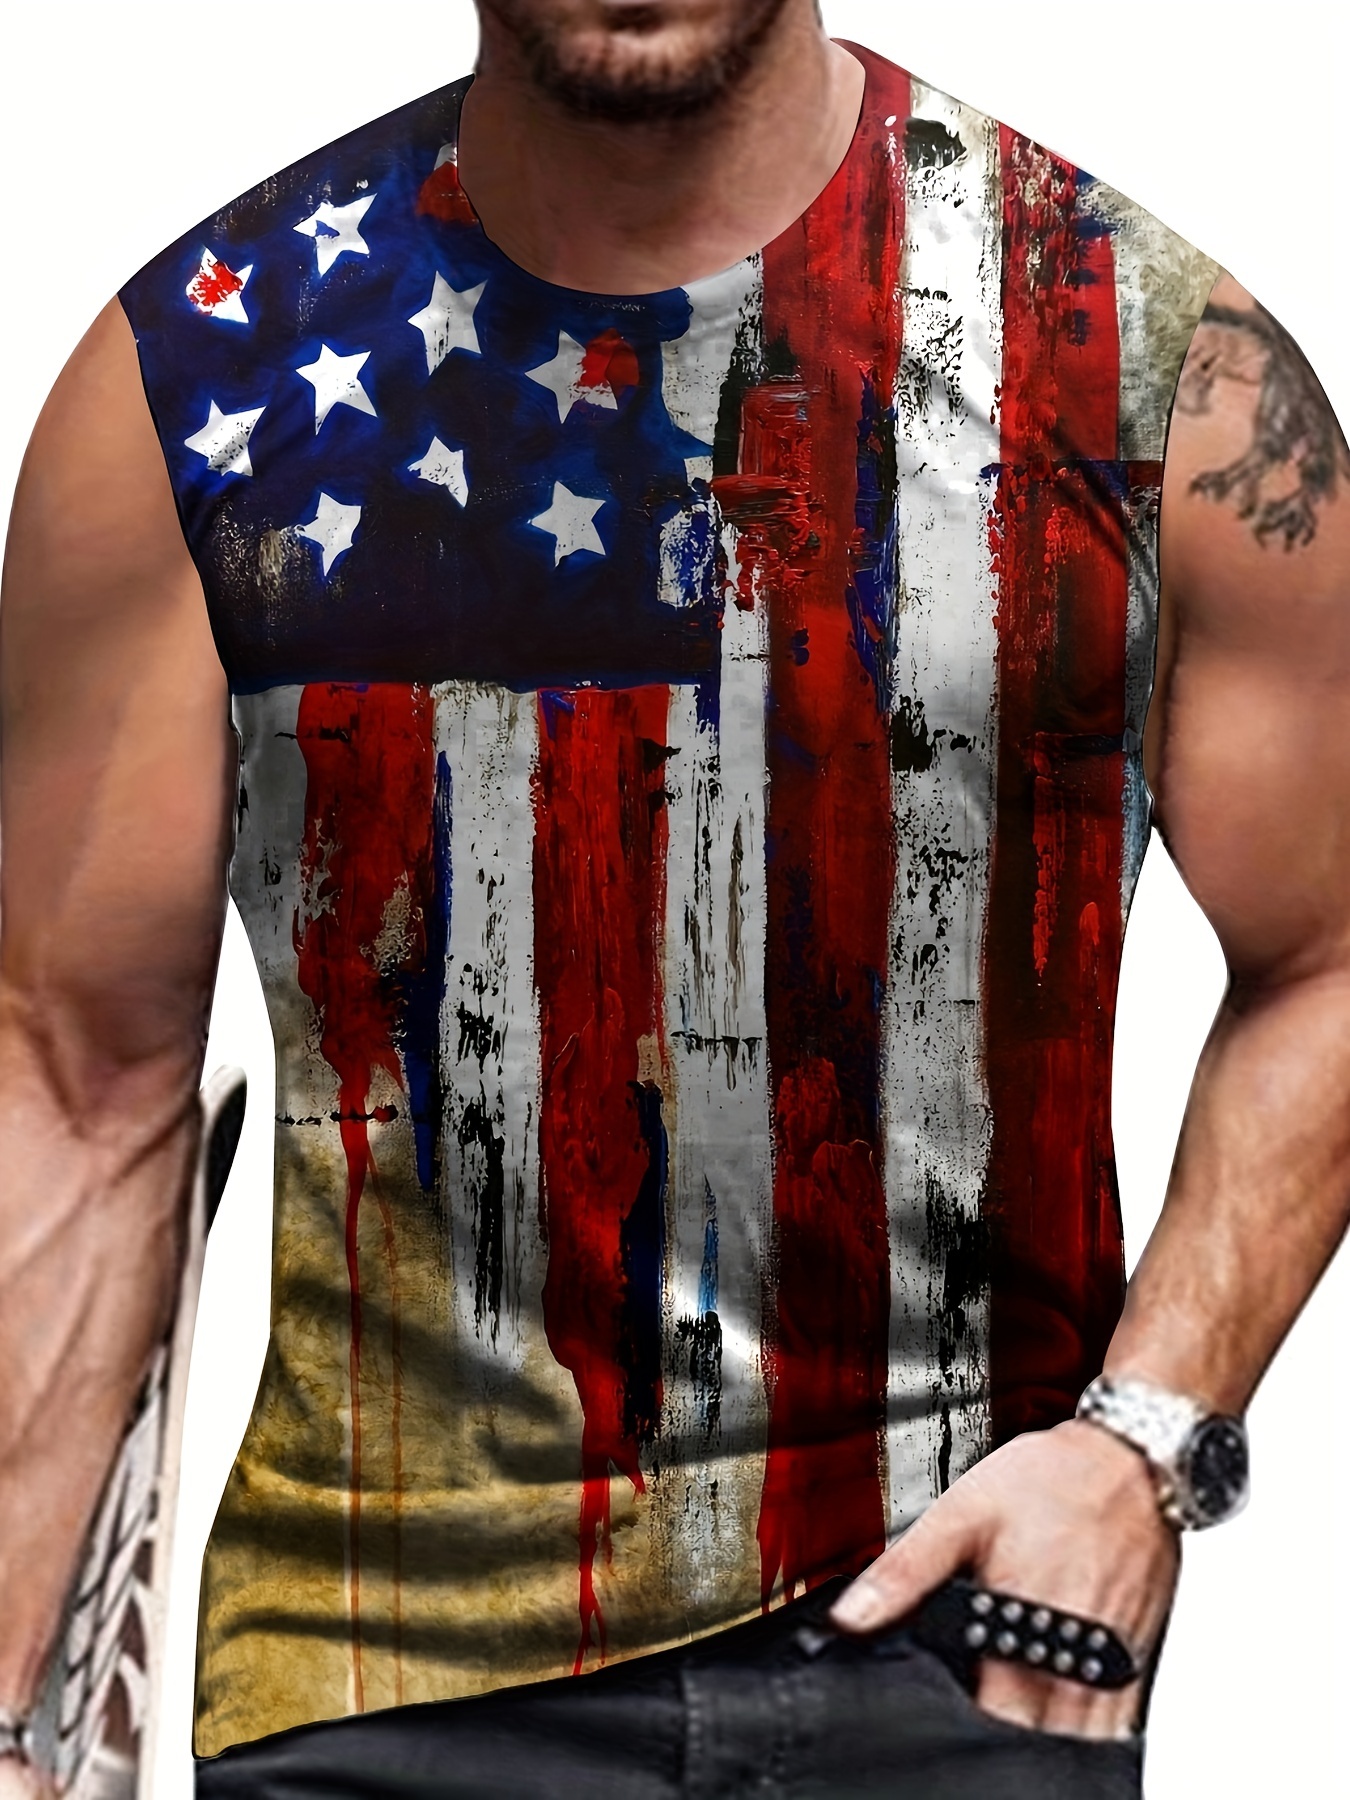  Mens Tank Top Tank Tops MenMen's Muscle Shirts Casual American  Flag Moisture Wicking Swim Beach Men's Tank Tops : Clothing, Shoes & Jewelry